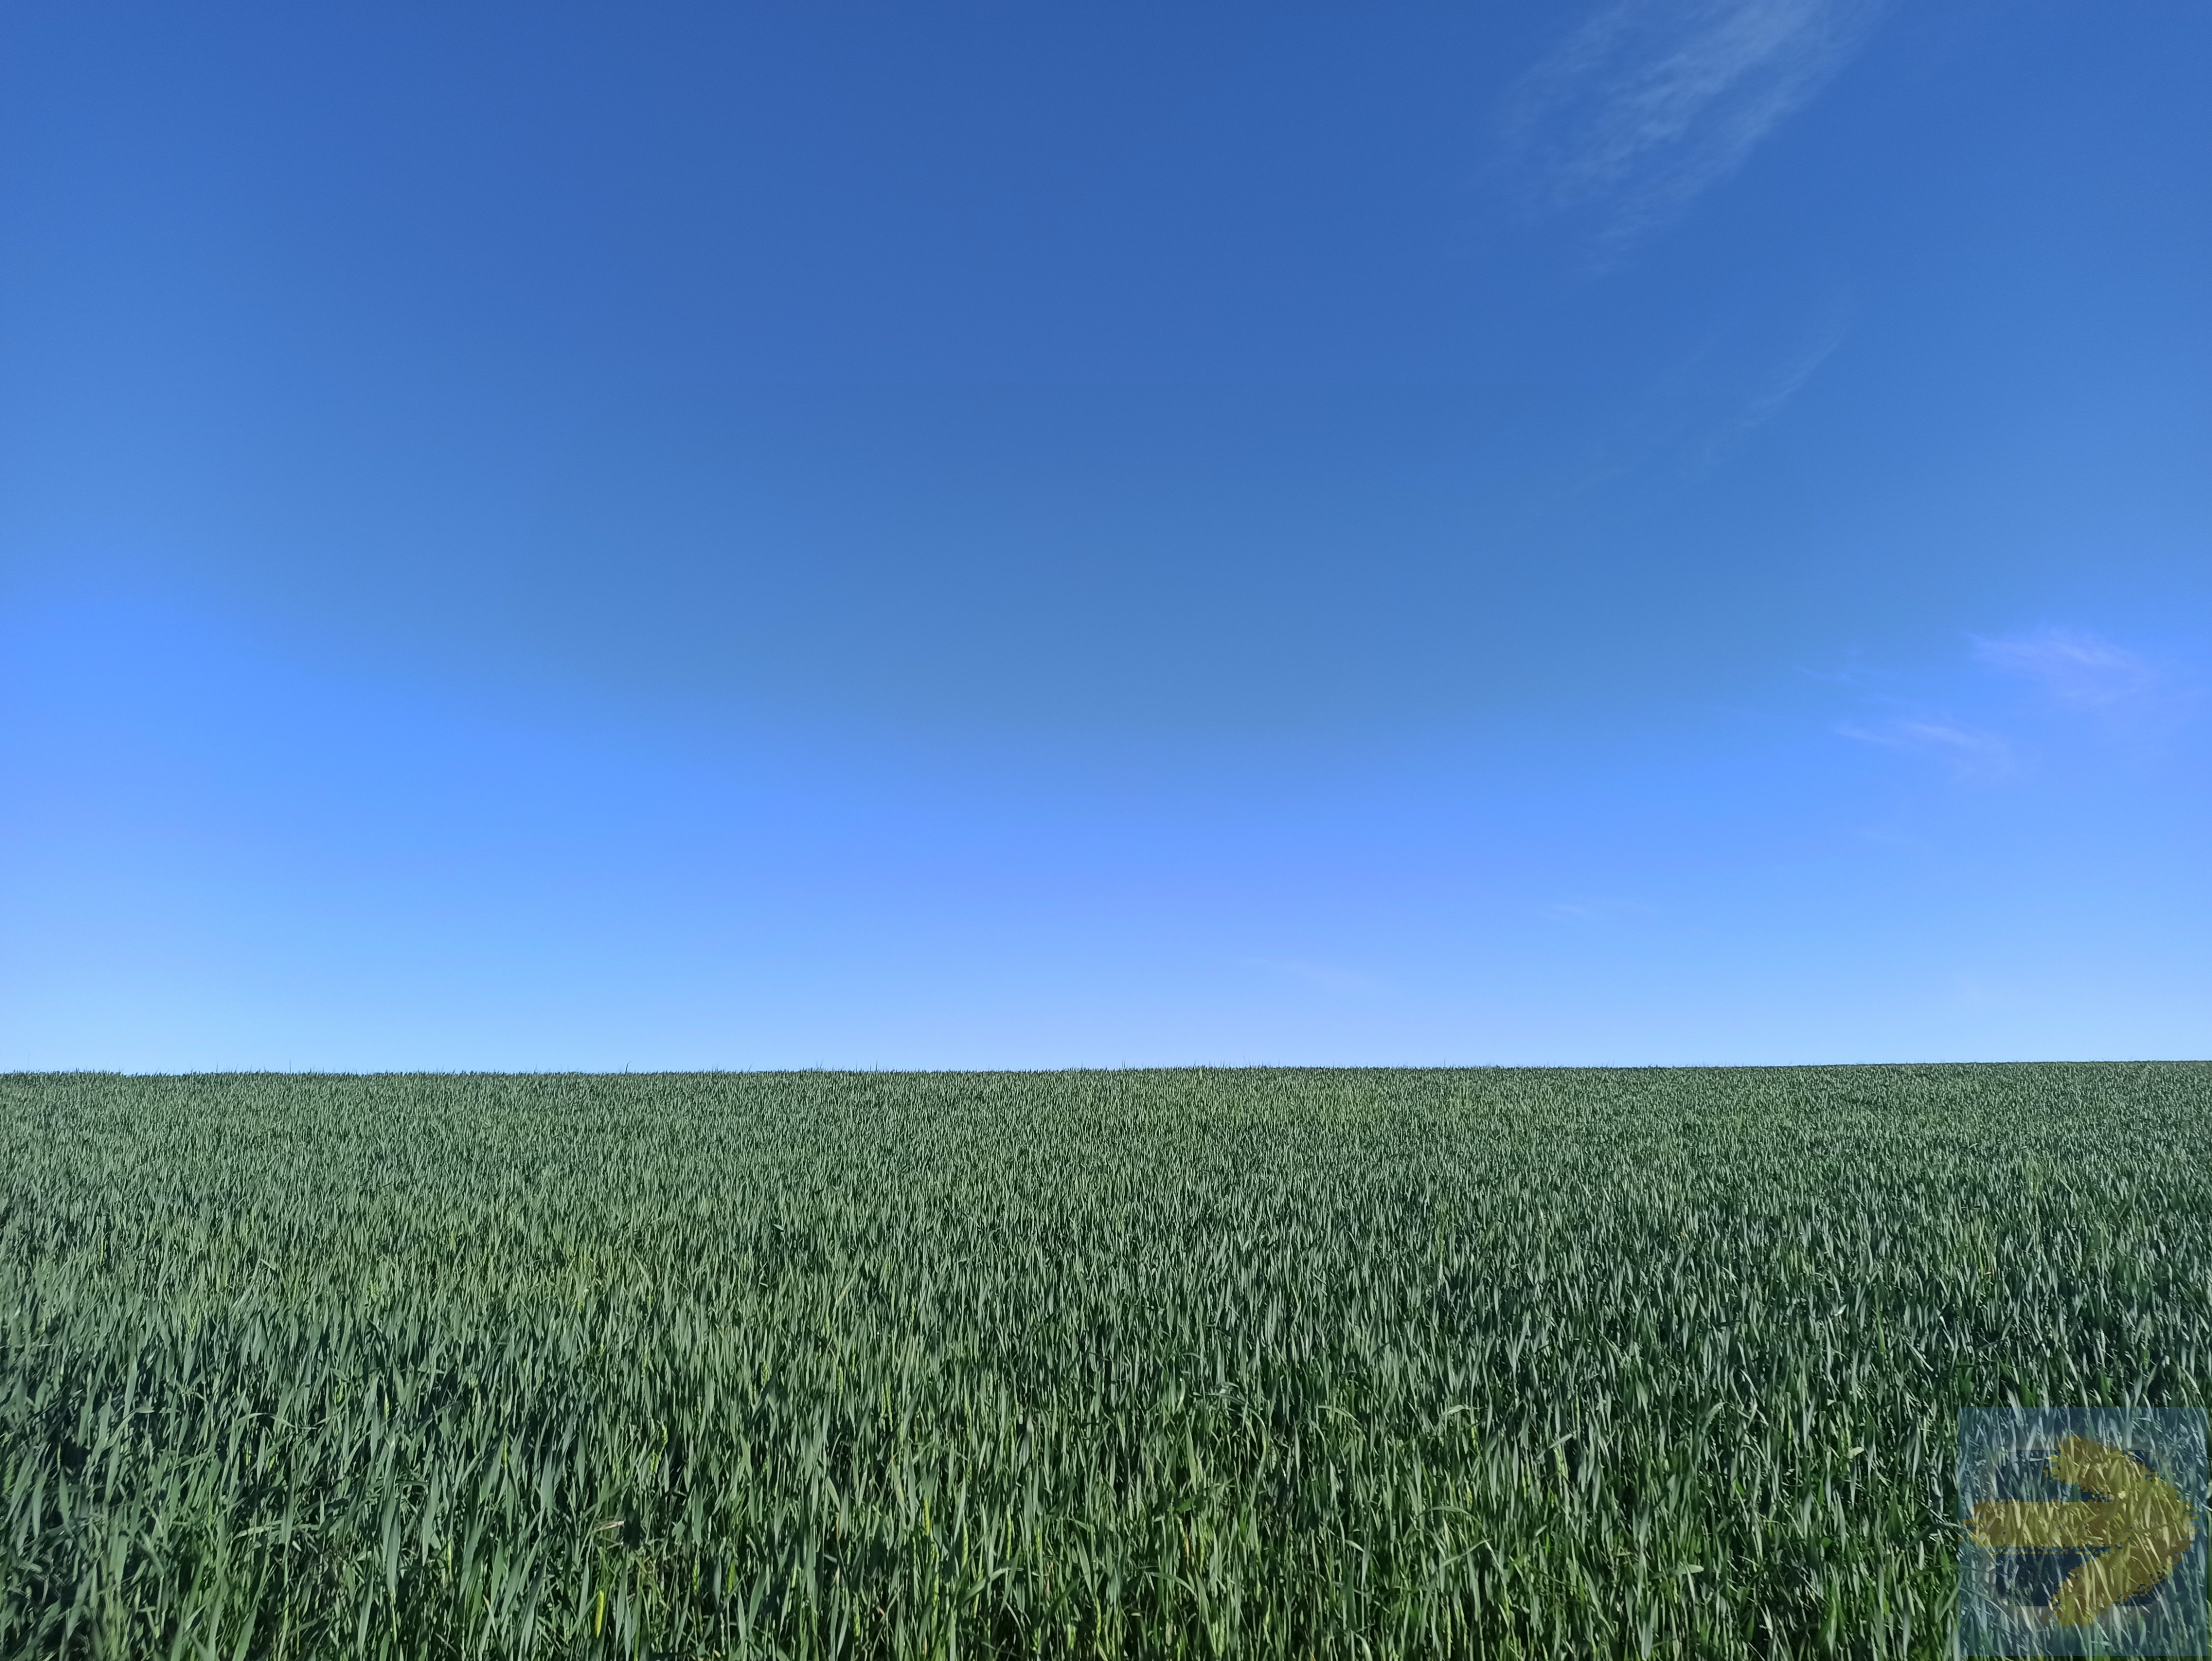 Cereal fields near Hornillos